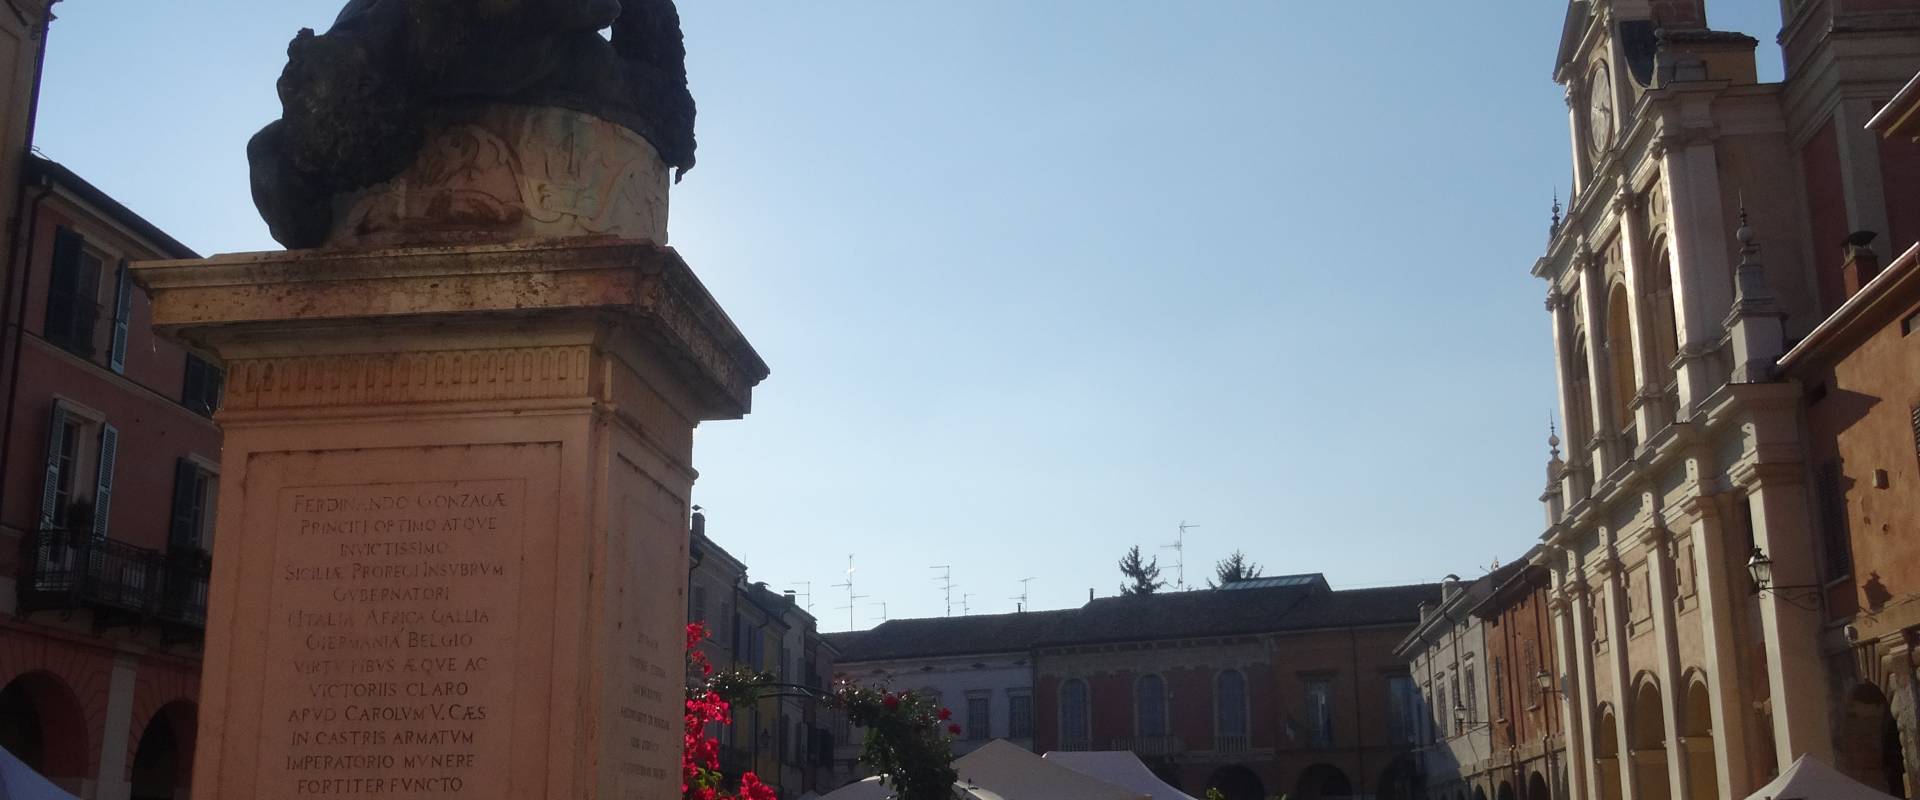 Monumento a Ferdinando Gonzaga a Guastalla foto di Pincez79